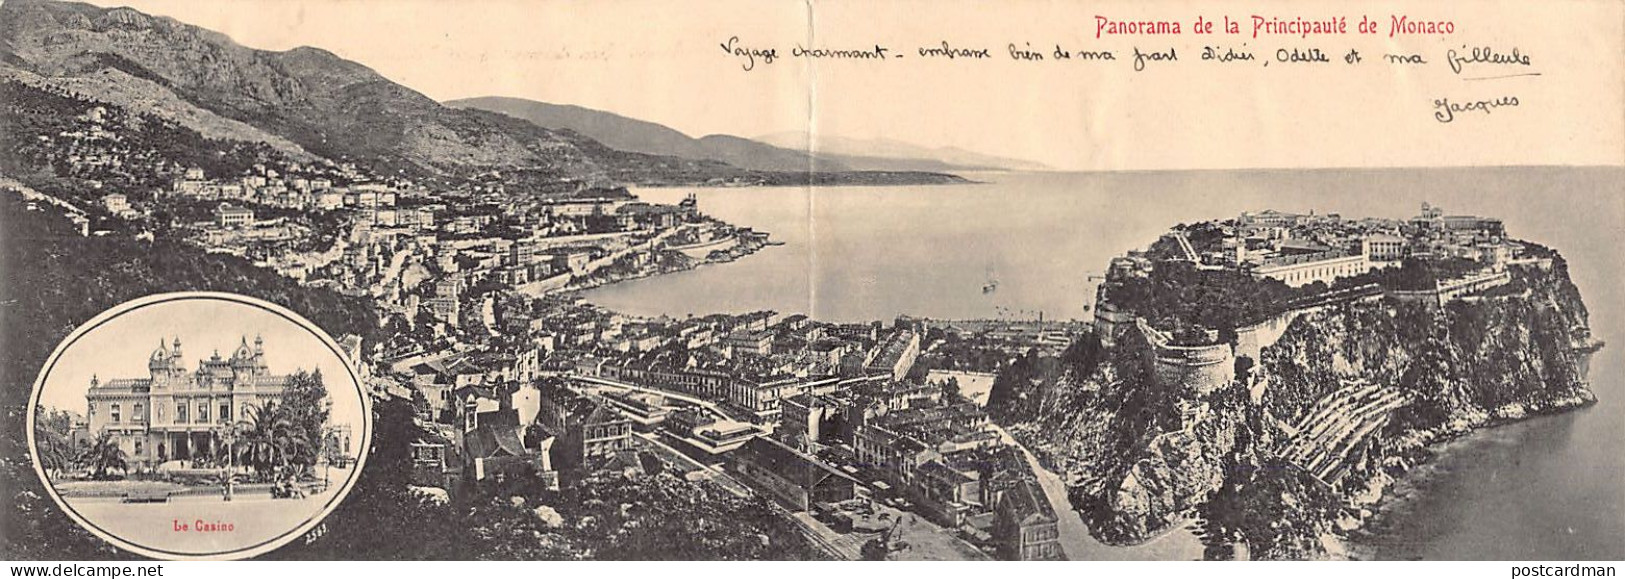 Panorama De La Principauté De Monaco - Le Casino - CARTE DOUBLE PANORAMIQUE - Tarjetas Panorámicas